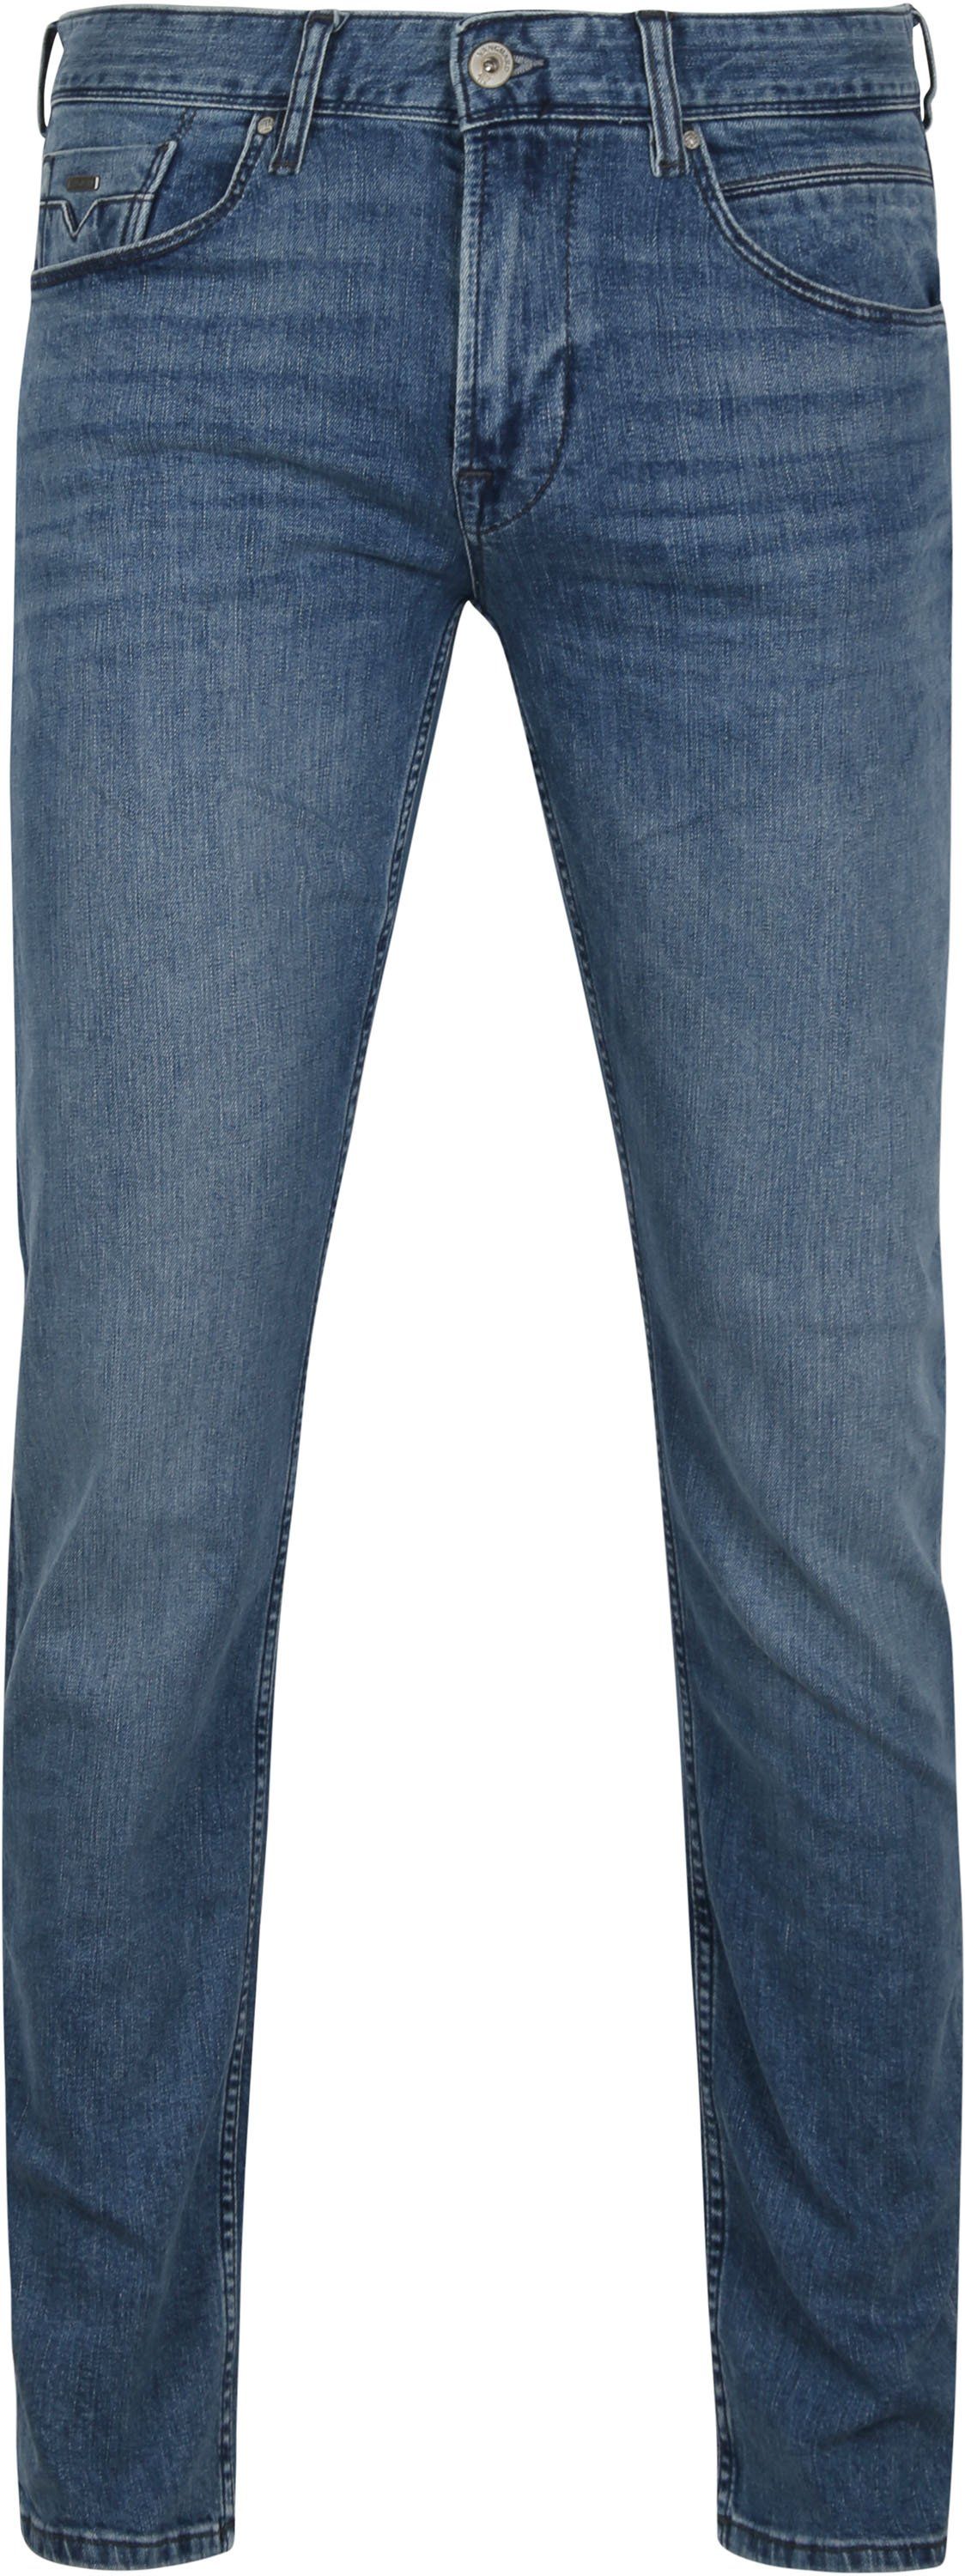 Vanguard Jeans V7 Rider Light Denim Blue size W 30